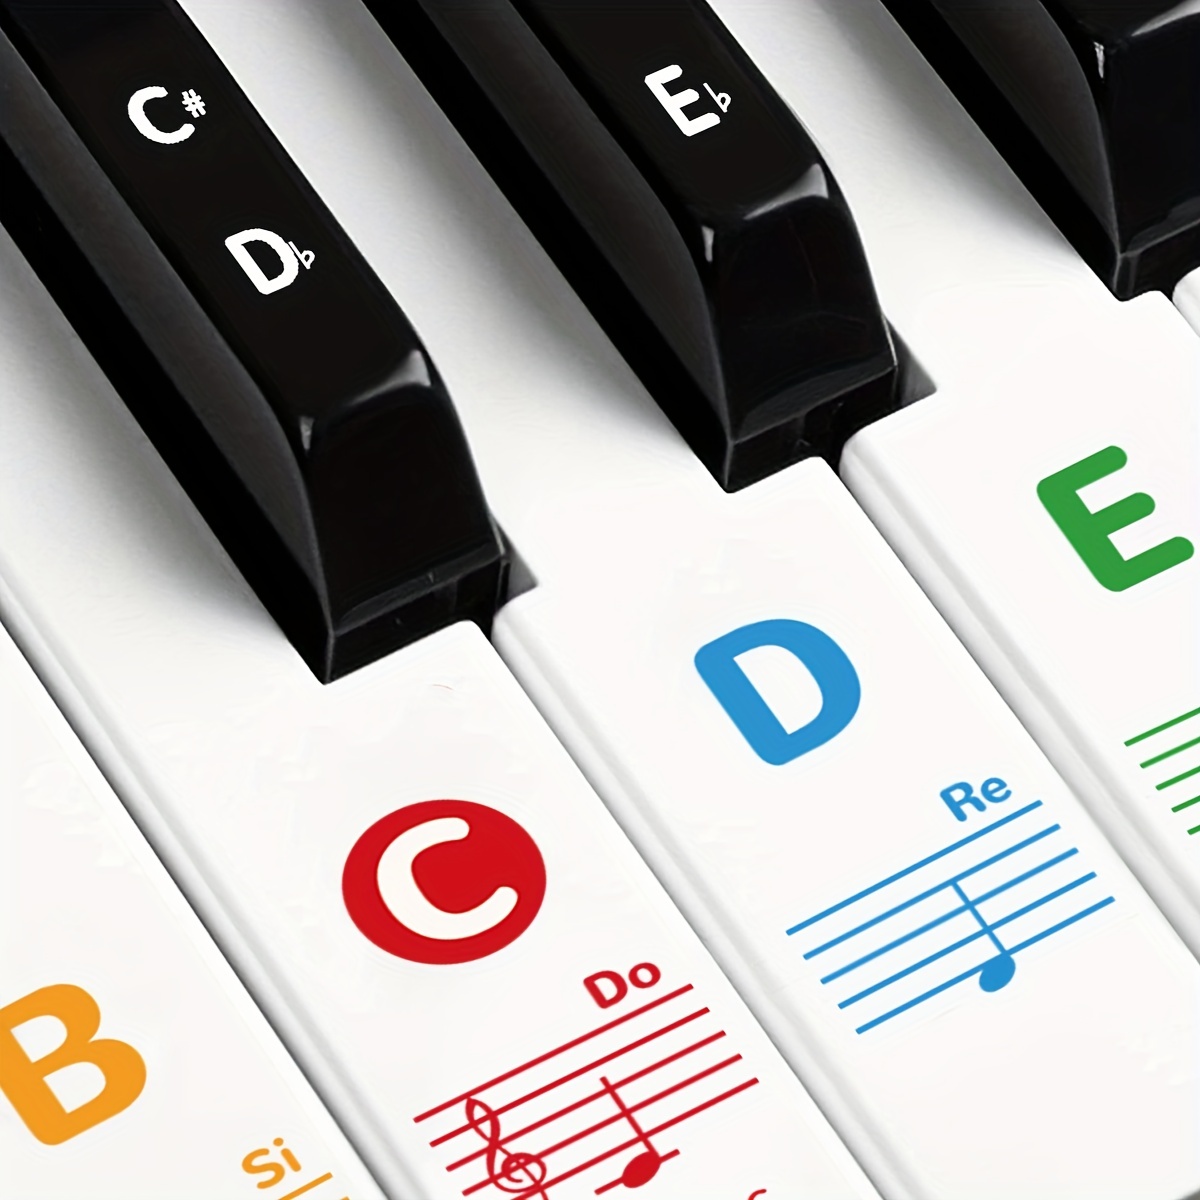 Áengus Piano / Keyboard Stickers - Autocollants de piano amovibles  transparents pour | bol